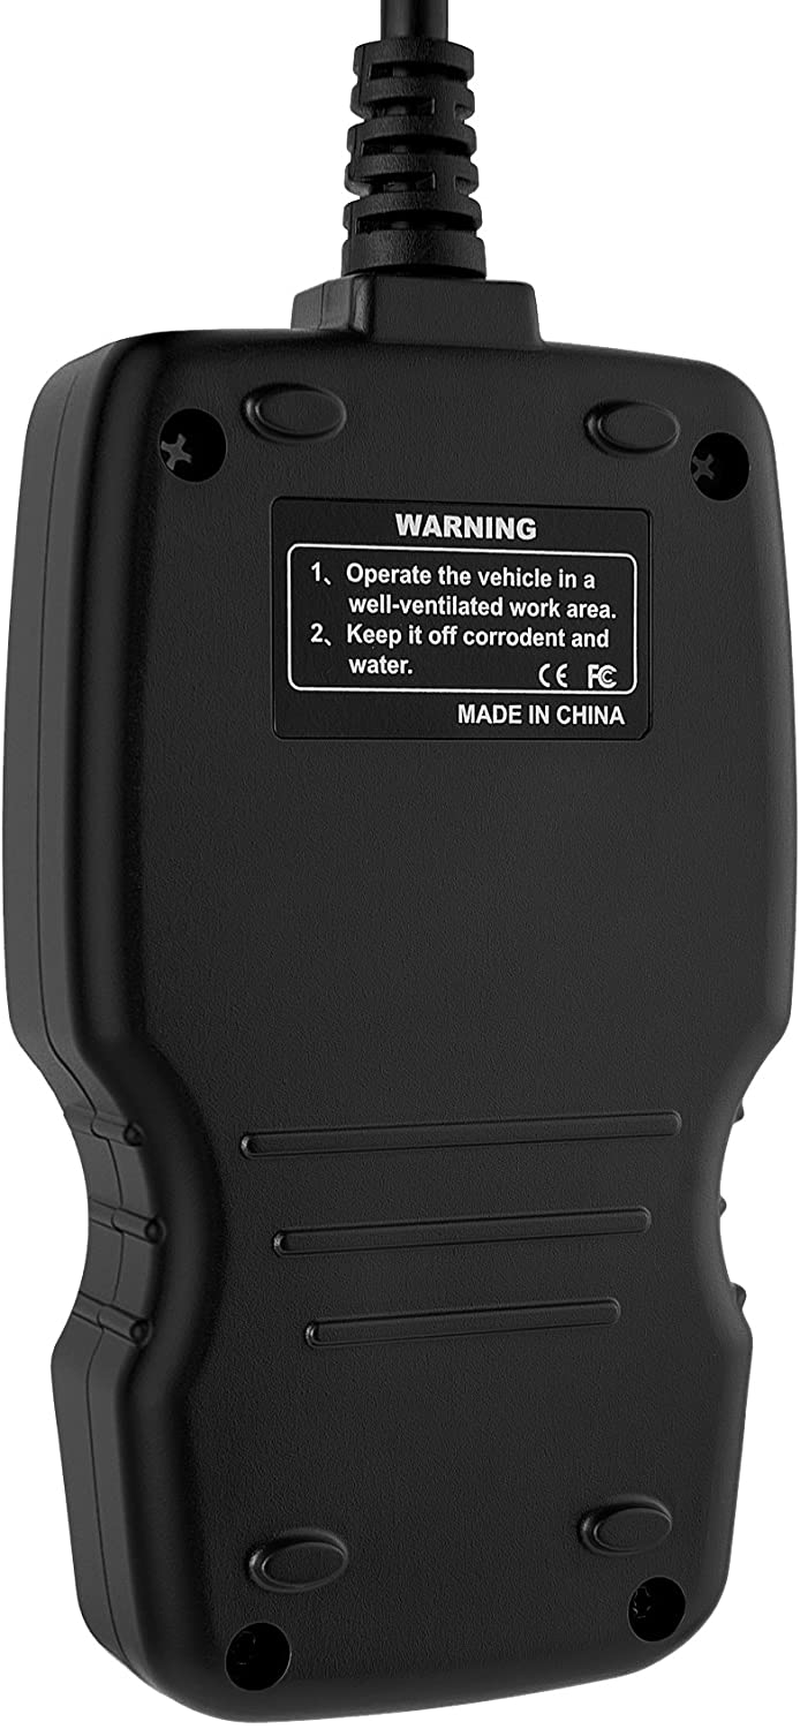 ANCEL AD310 Classic Enhanced Universal OBD II Scanner Car Engine Fault Code Reader CAN Diagnostic Scan Tool-Black  ANCEL   